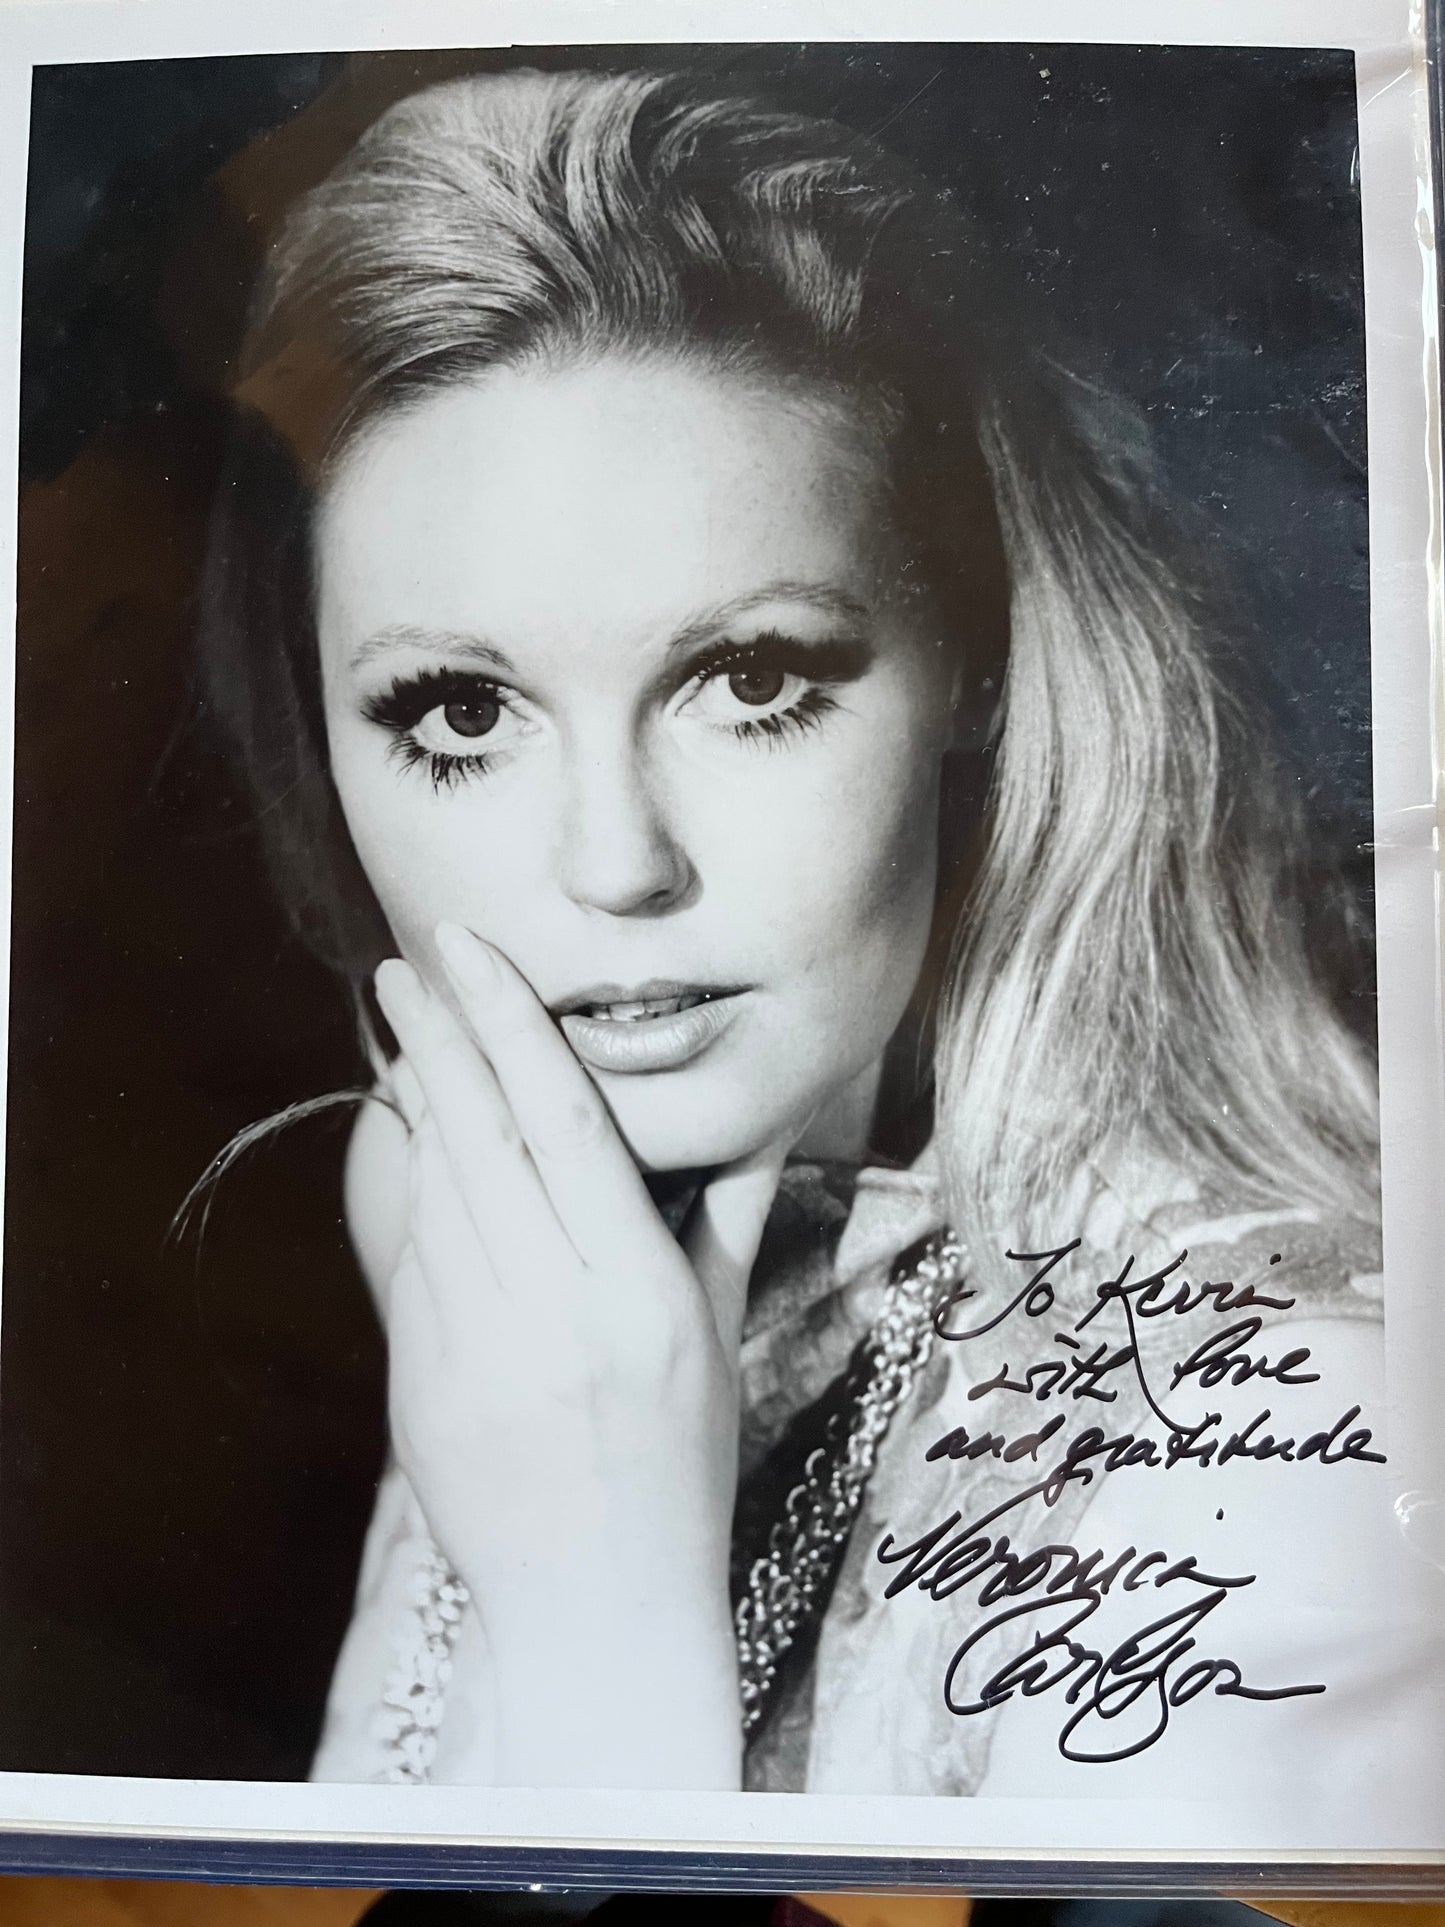 Veronica Carlson, Hammer horror actress, autograph